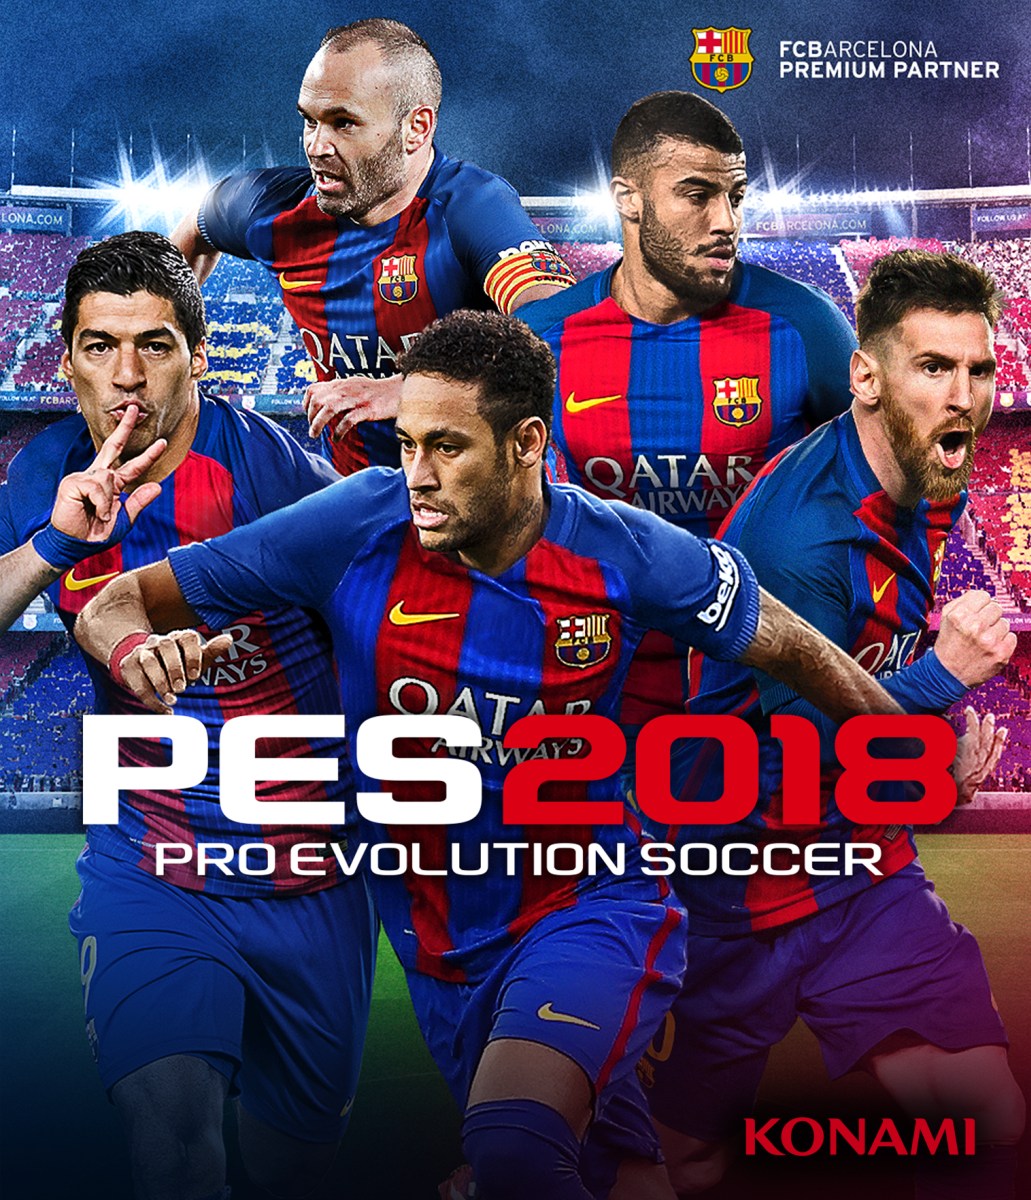 PES 2018 Master League - Beginner's Guide - Pro Evolution Soccer 2018 -  Gamereactor